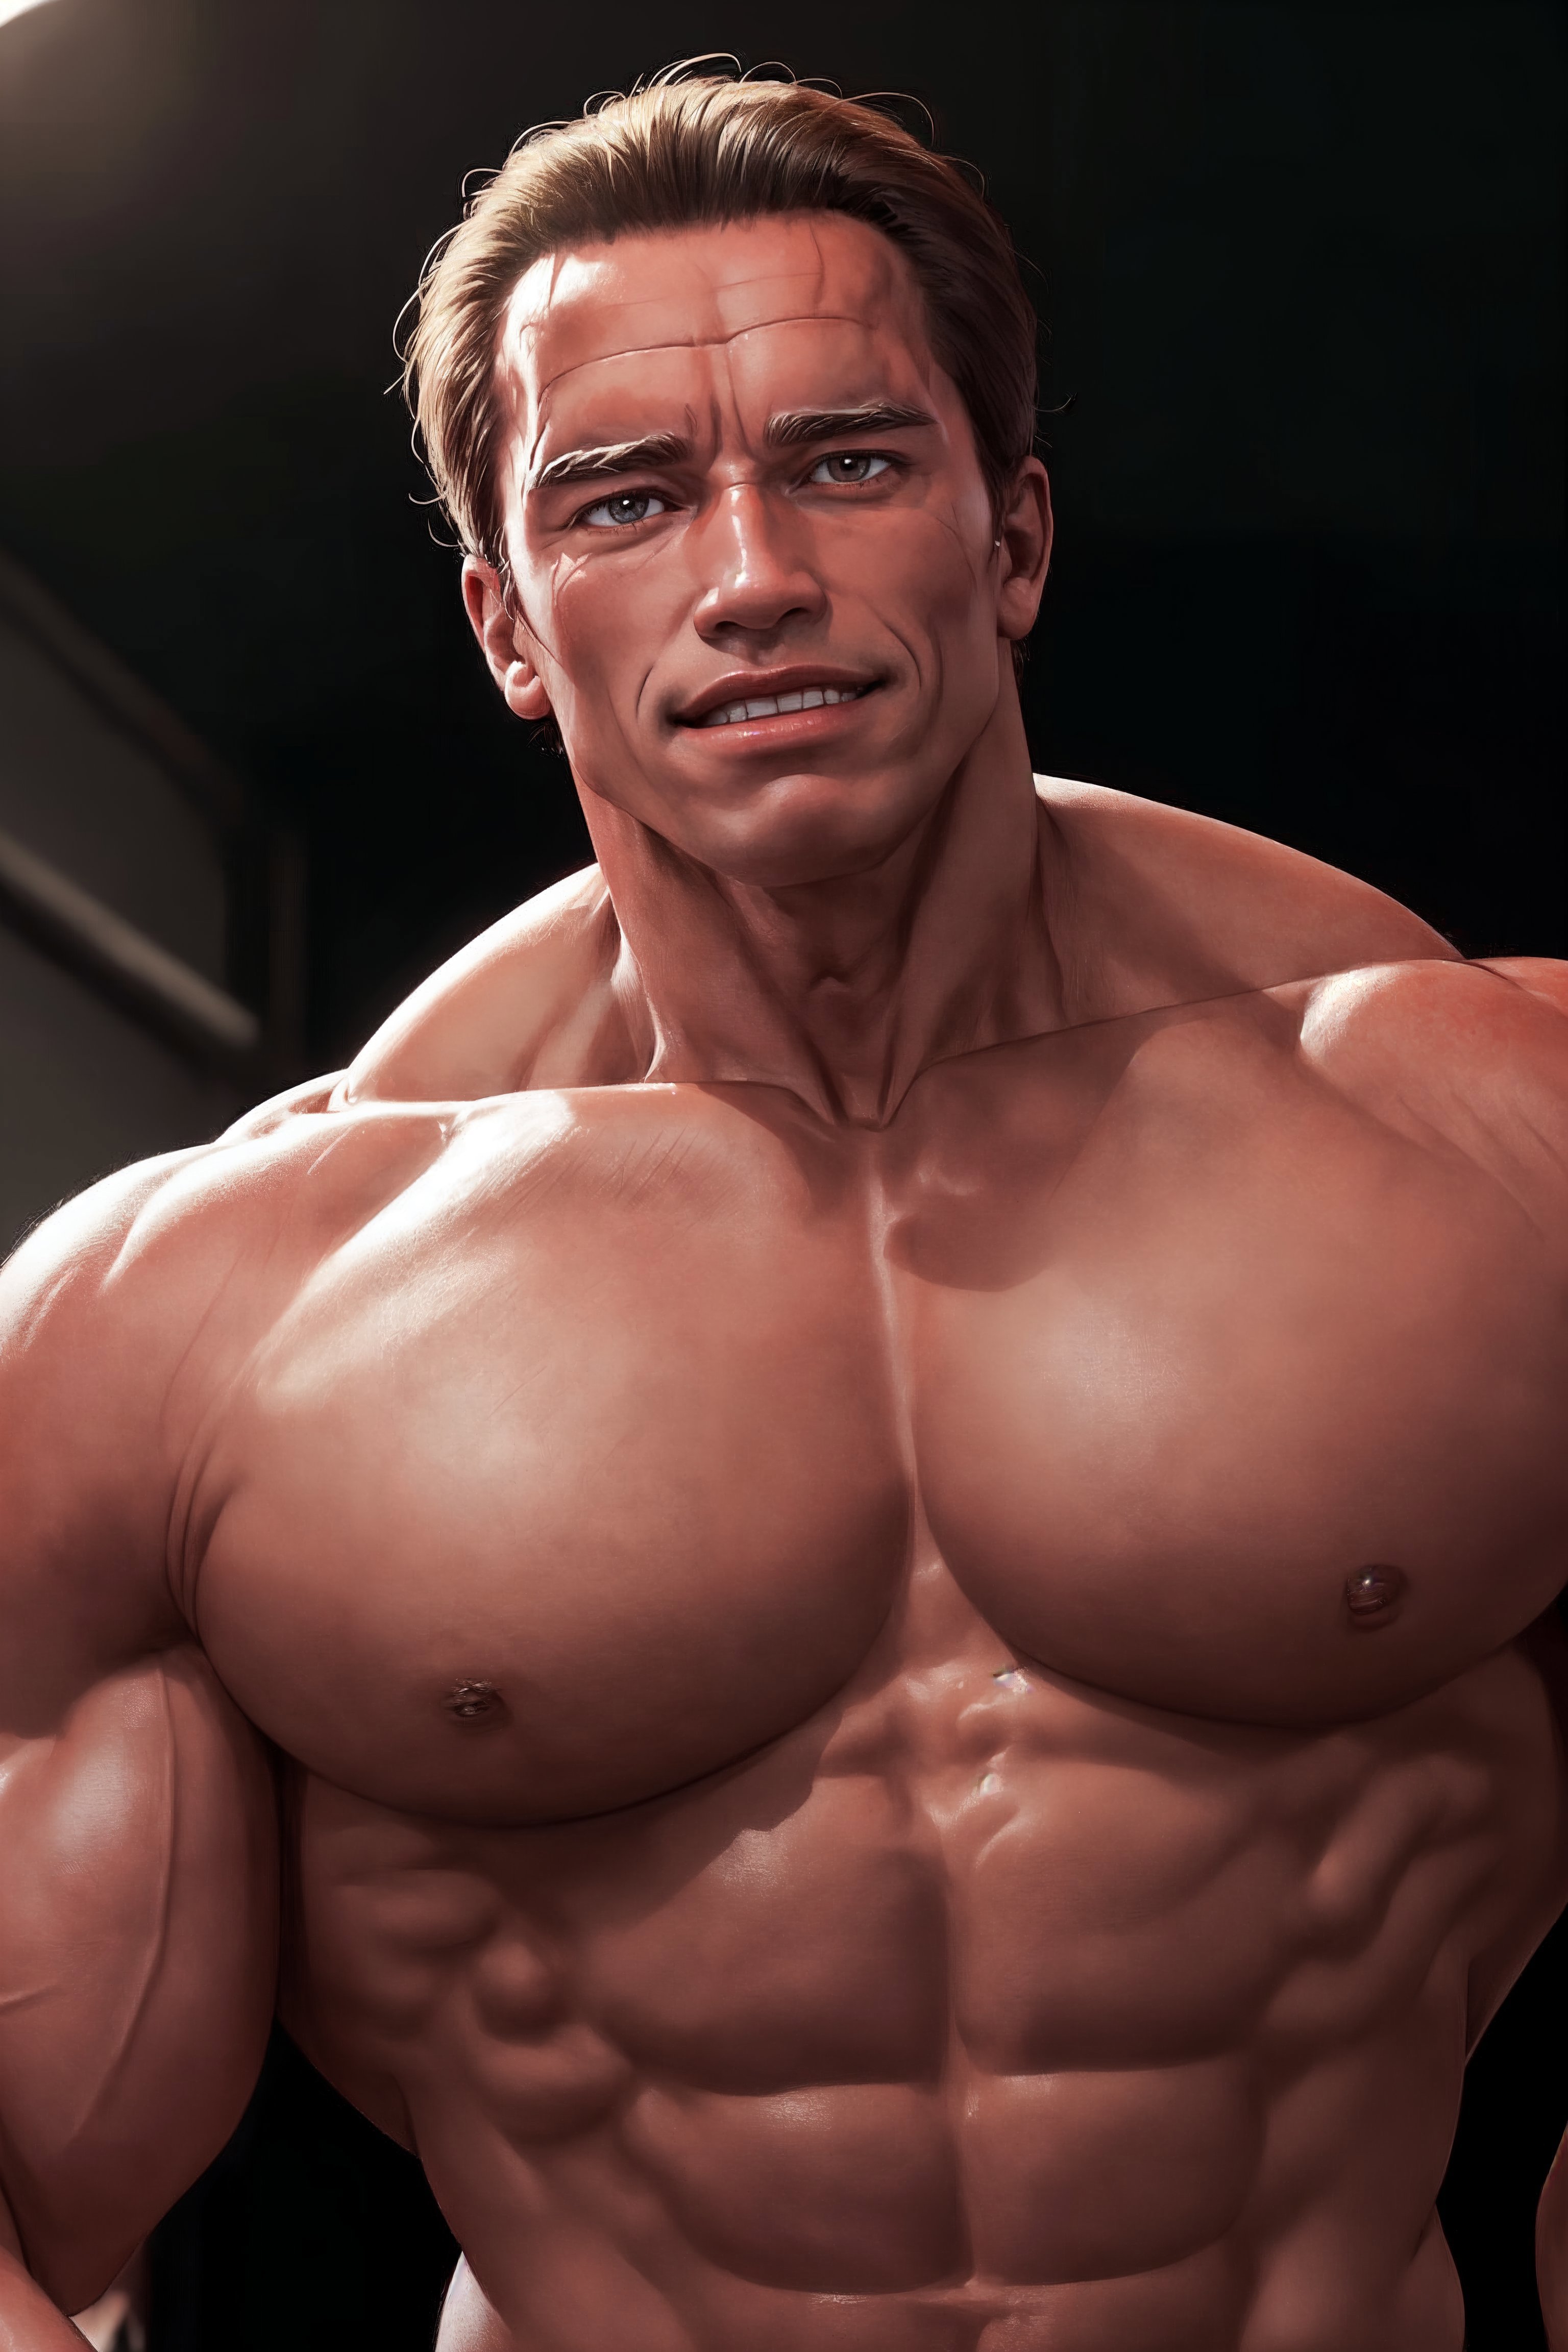 Arnold Schwarzenegger image by KikolokoXL